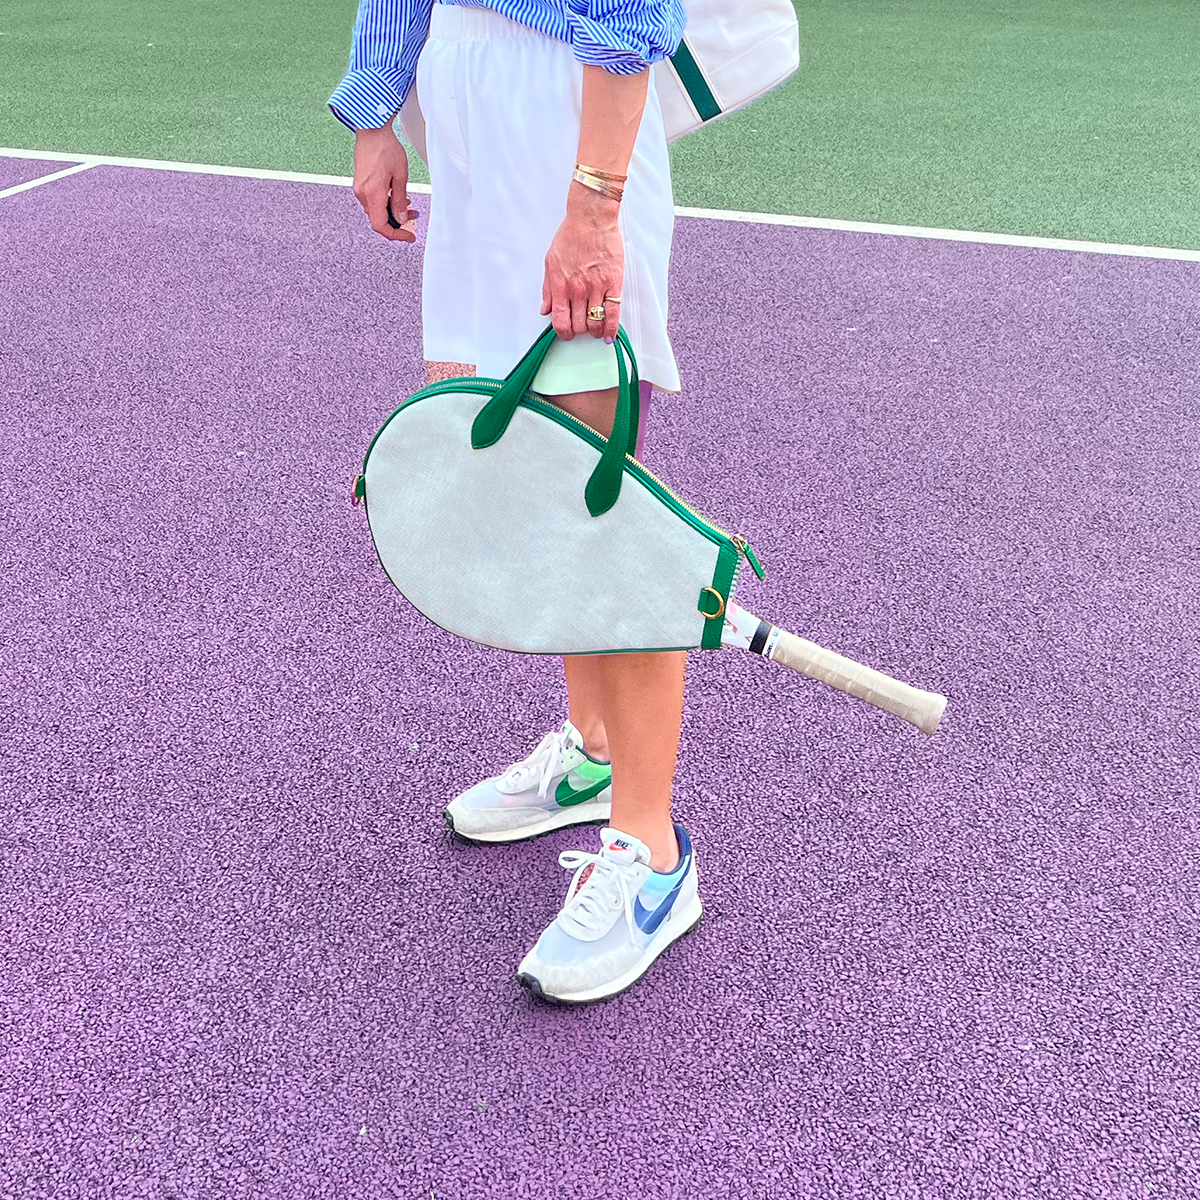 Tennis Racket Case